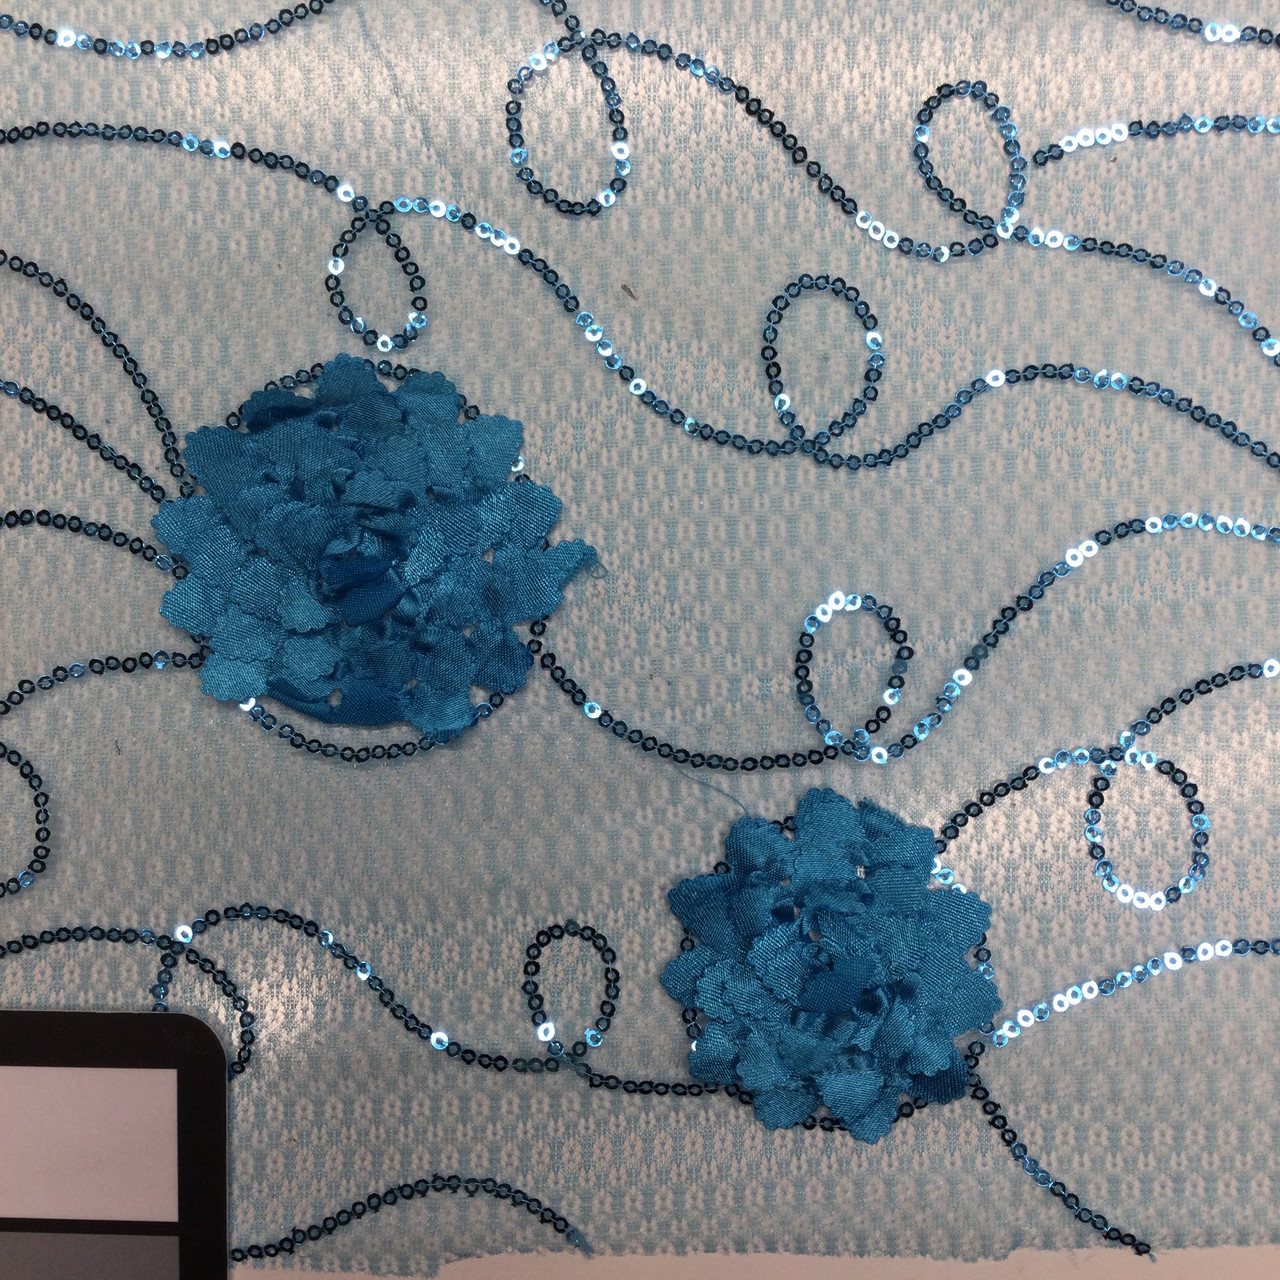 blue swirls and flowers